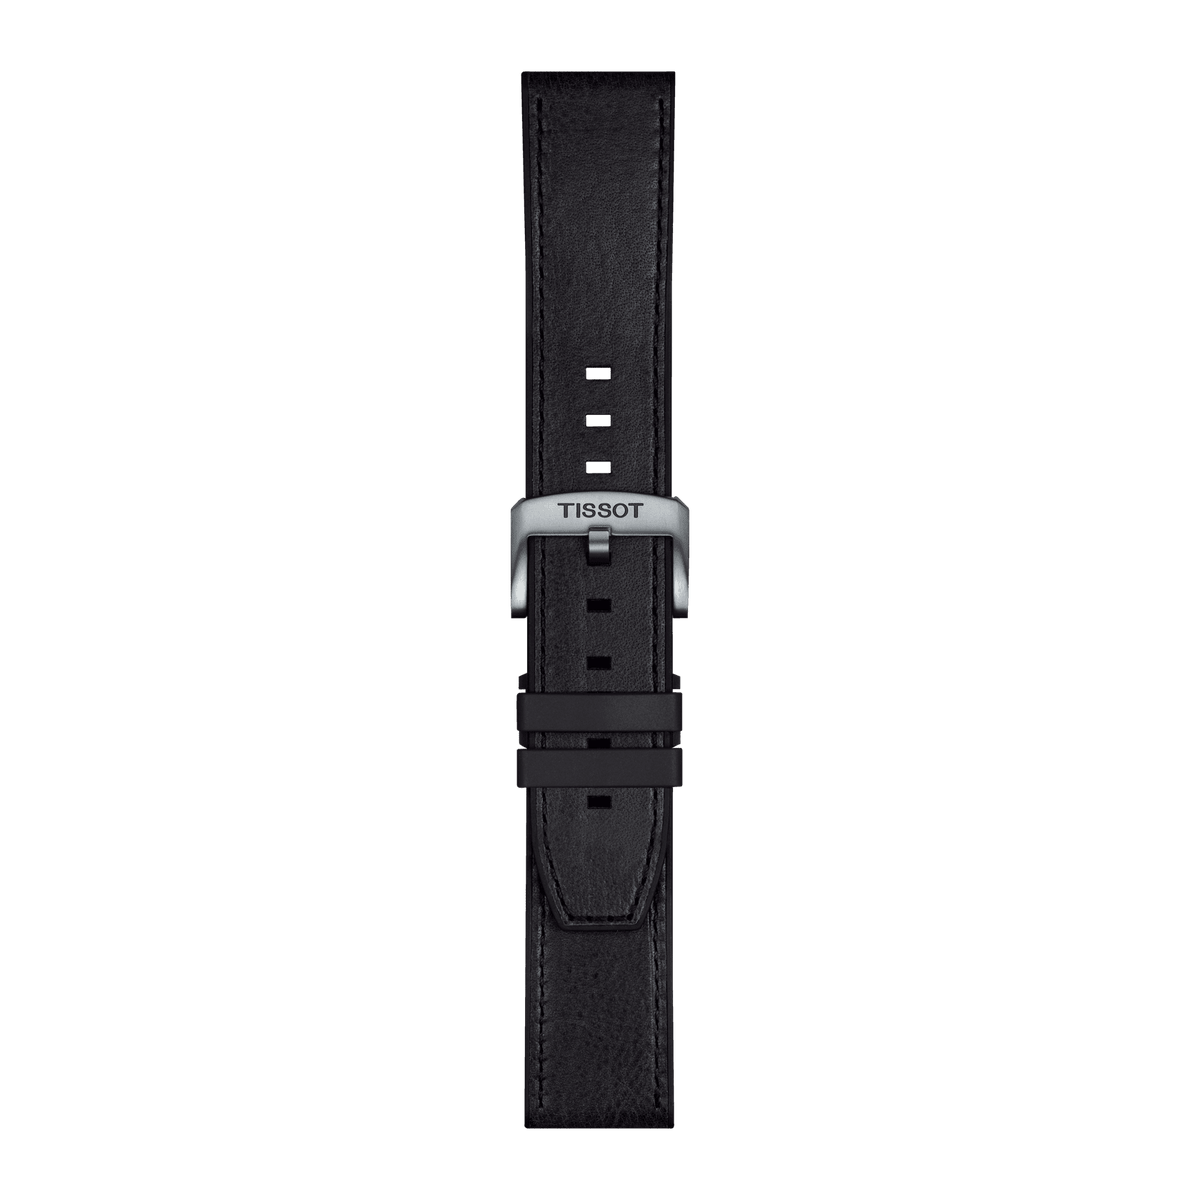 Official Tissot BLACK LEATHER strap ANSA 23 MM T852047779